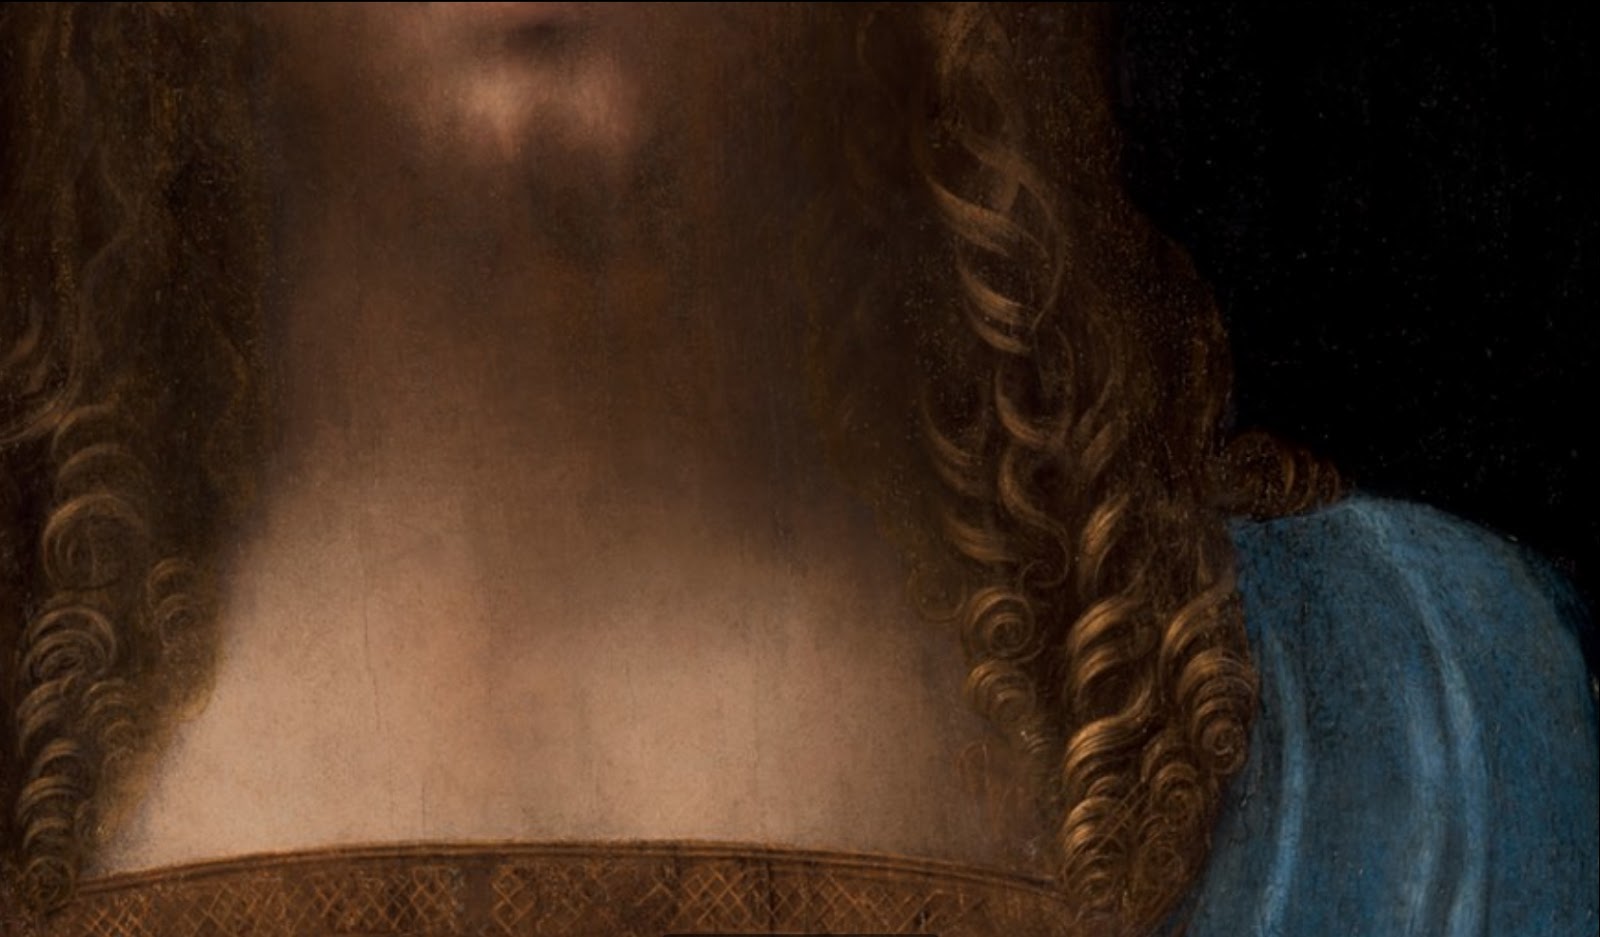 Leonardo+da+Vinci-1452-1519 (860).jpg